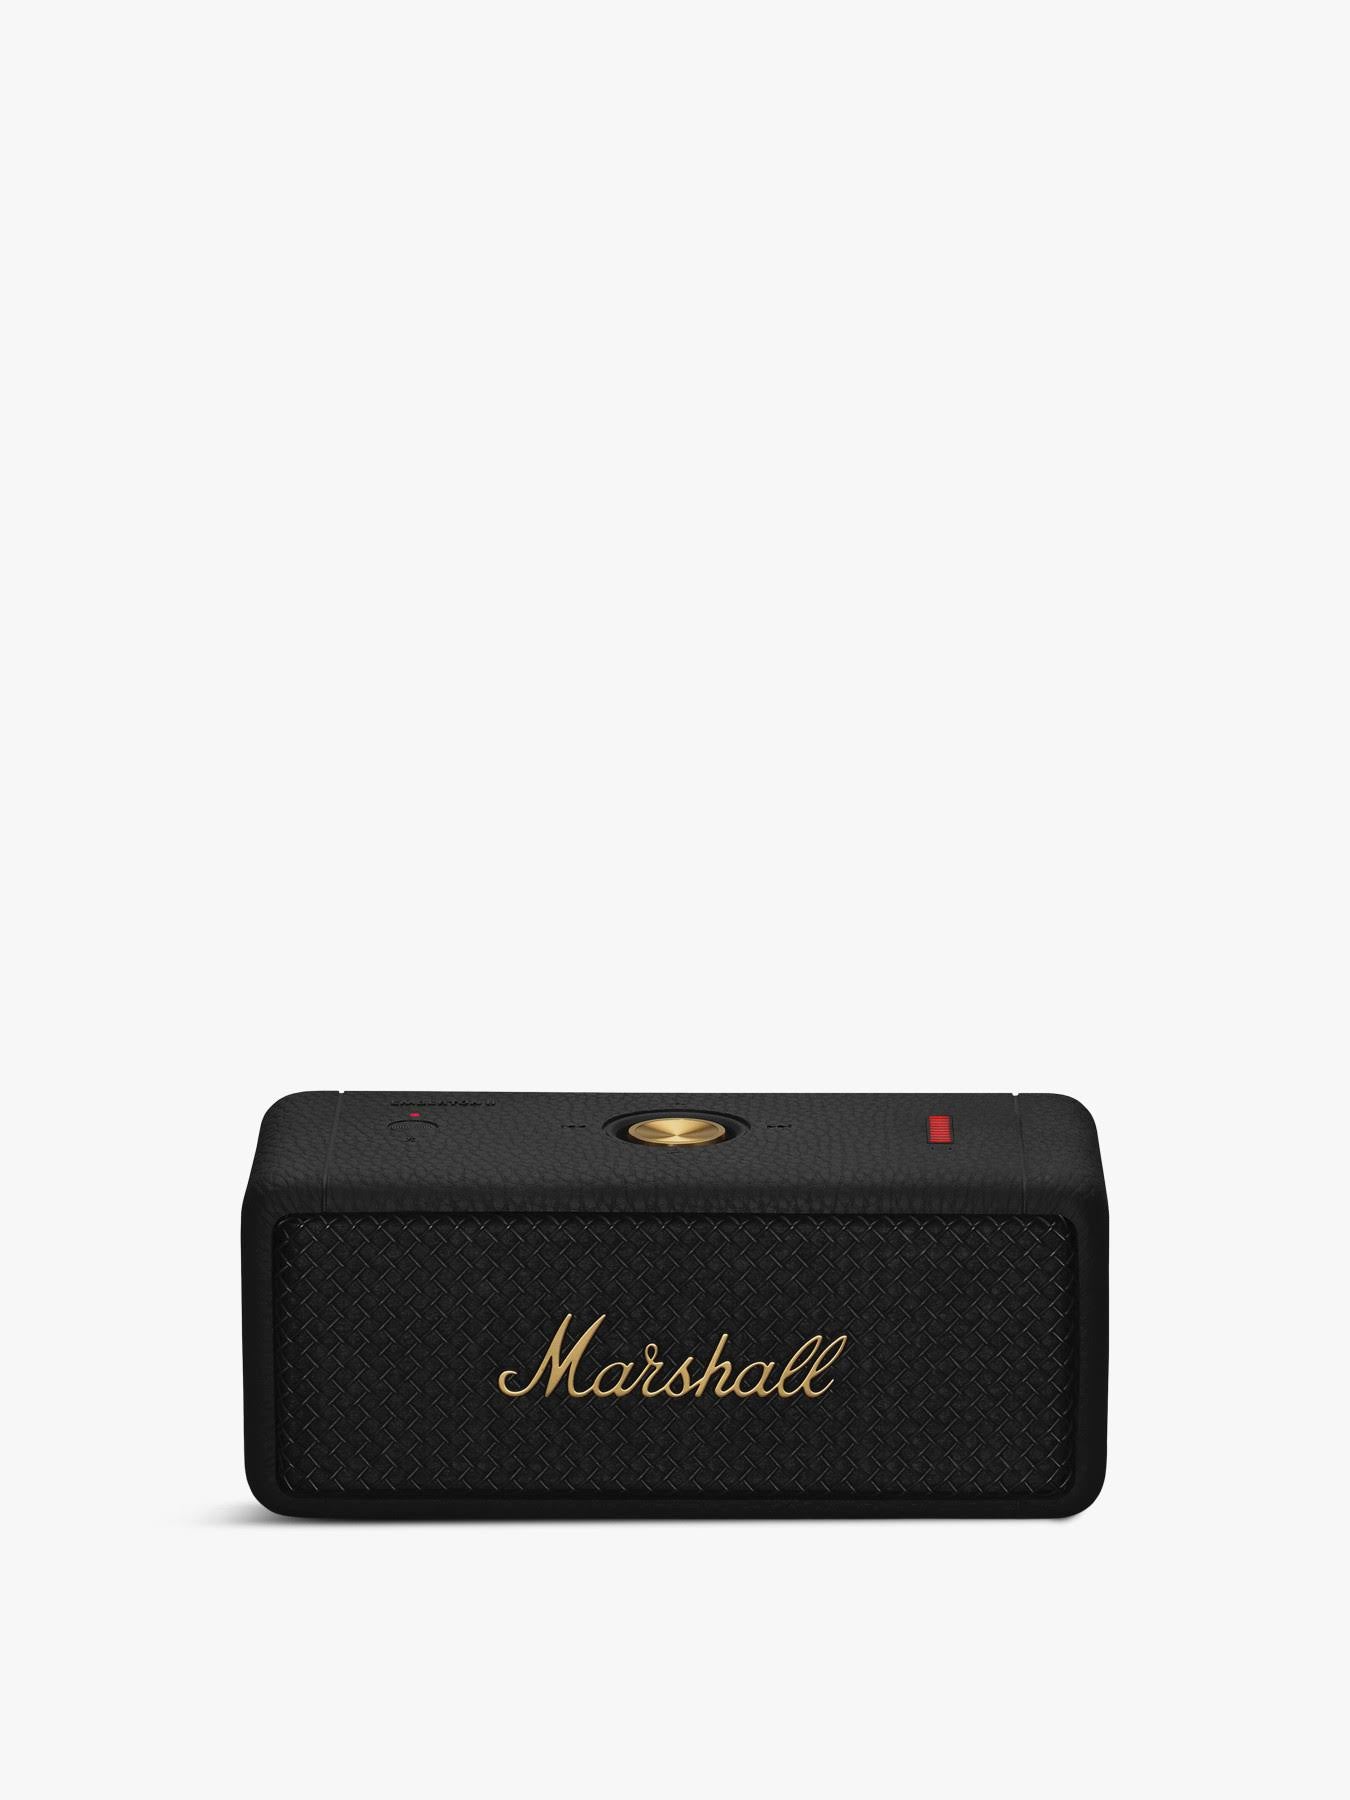 Marshall Emberton II Altavoz Bluetooth Negro